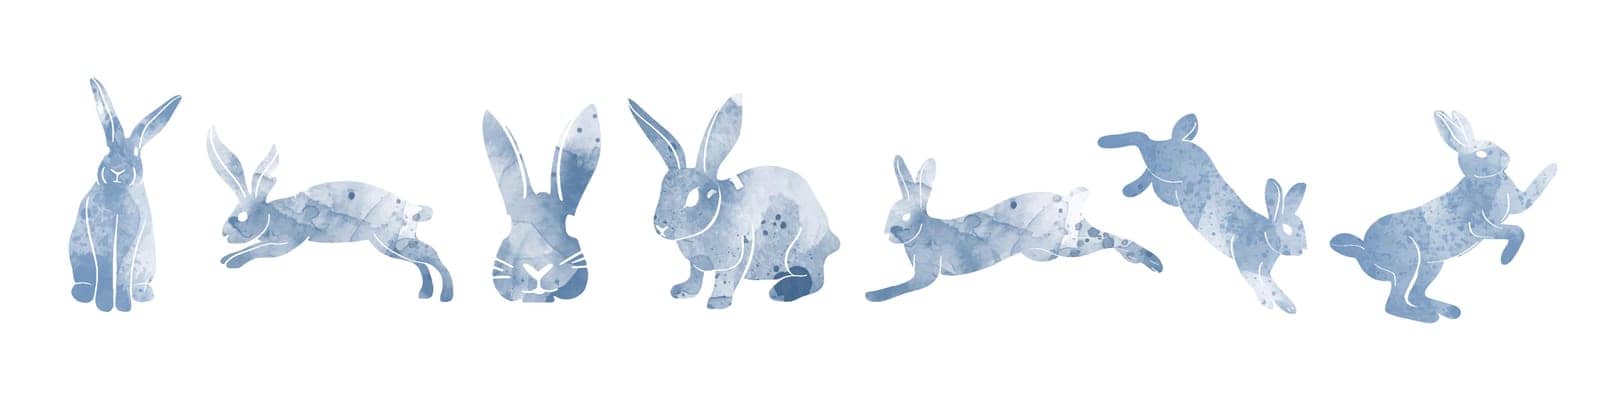 Watercolor style blue rabbit silhouette illustration set. by ku4erashka